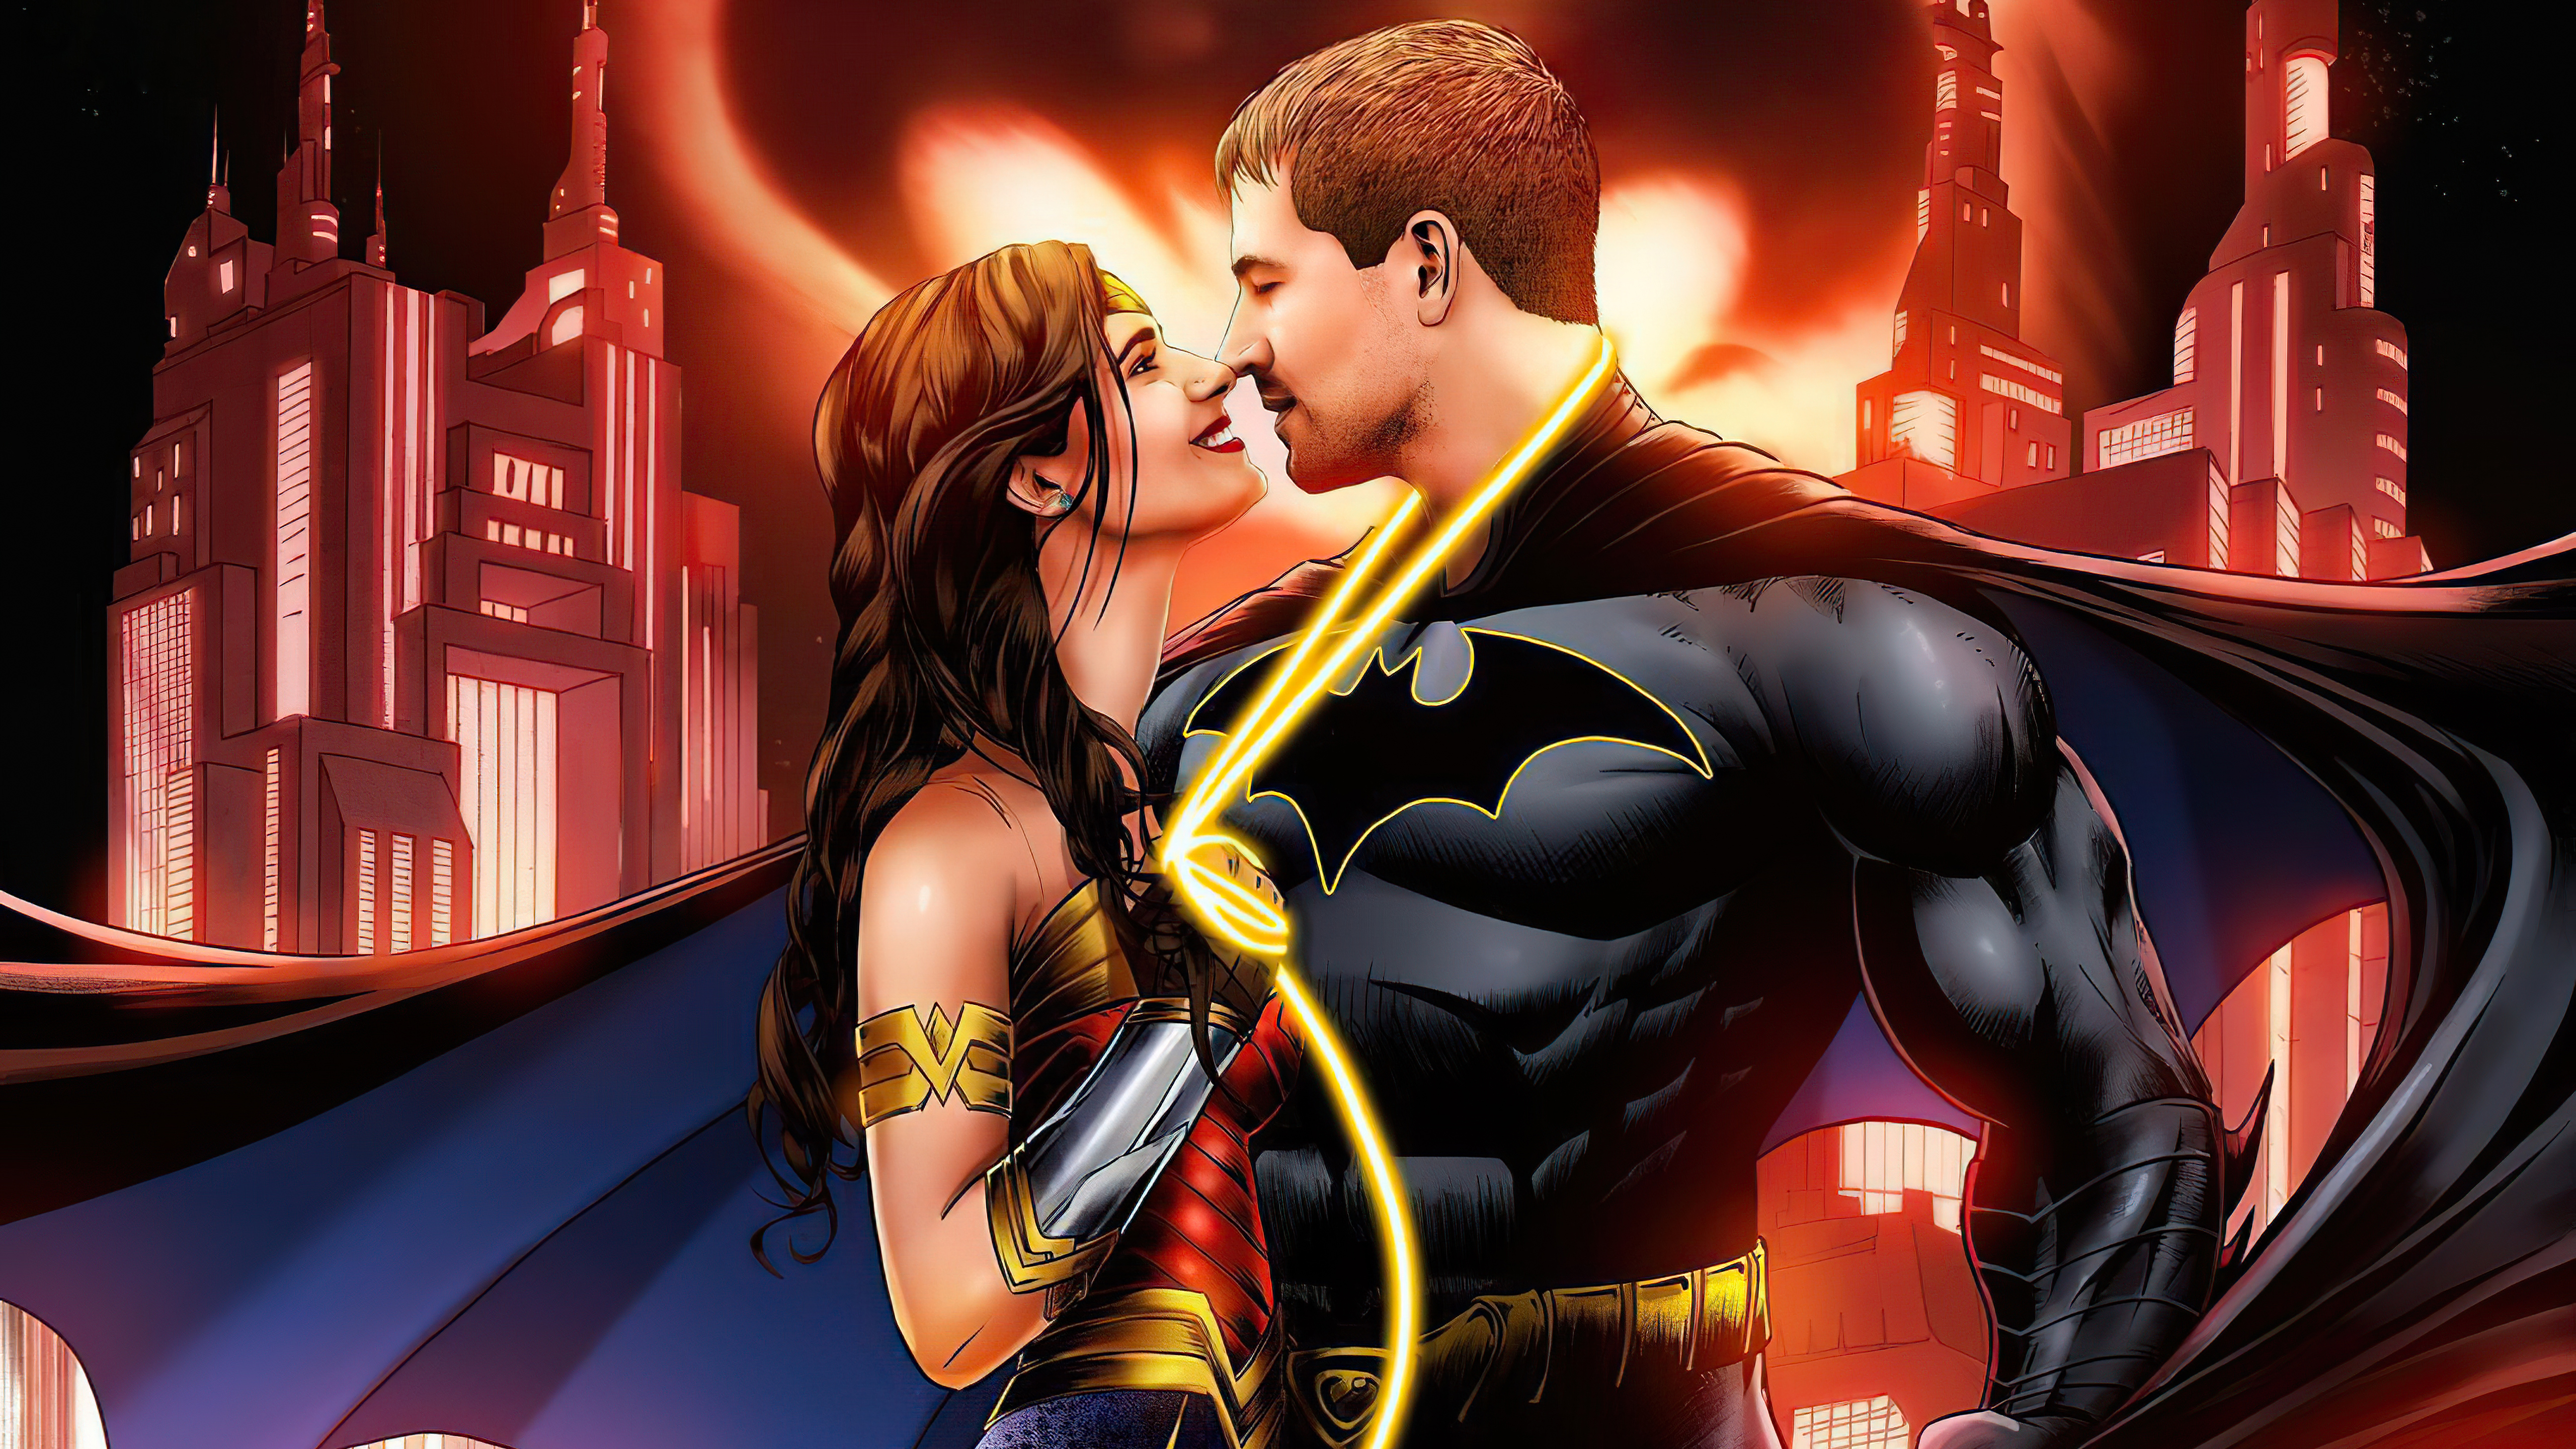 Wonder woman and batman romance